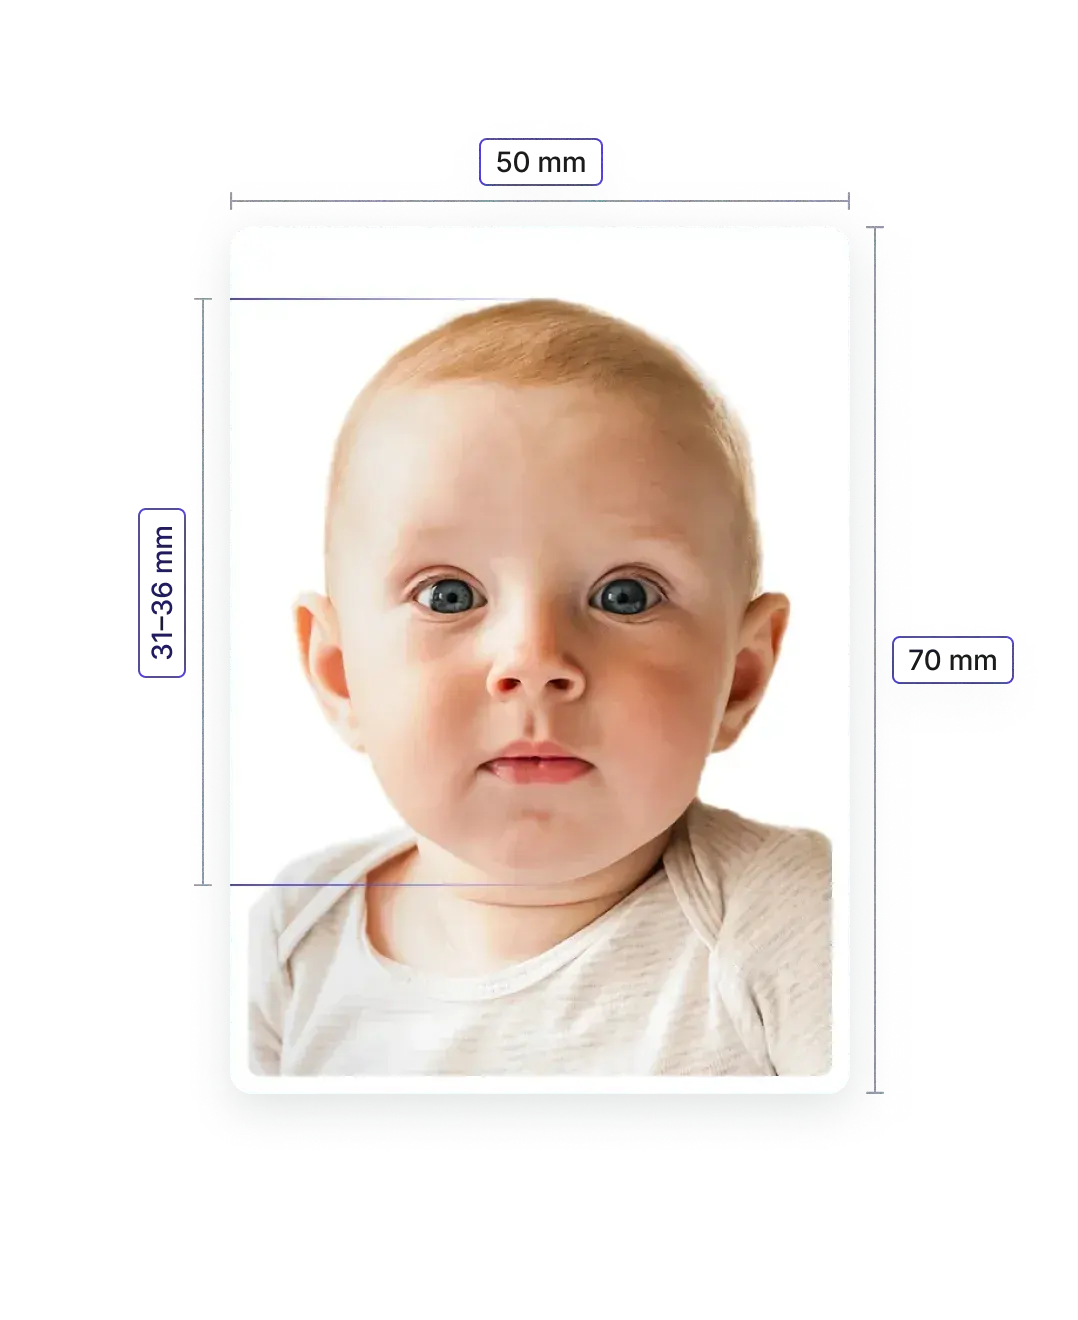 Baby Passport Photos Specifications